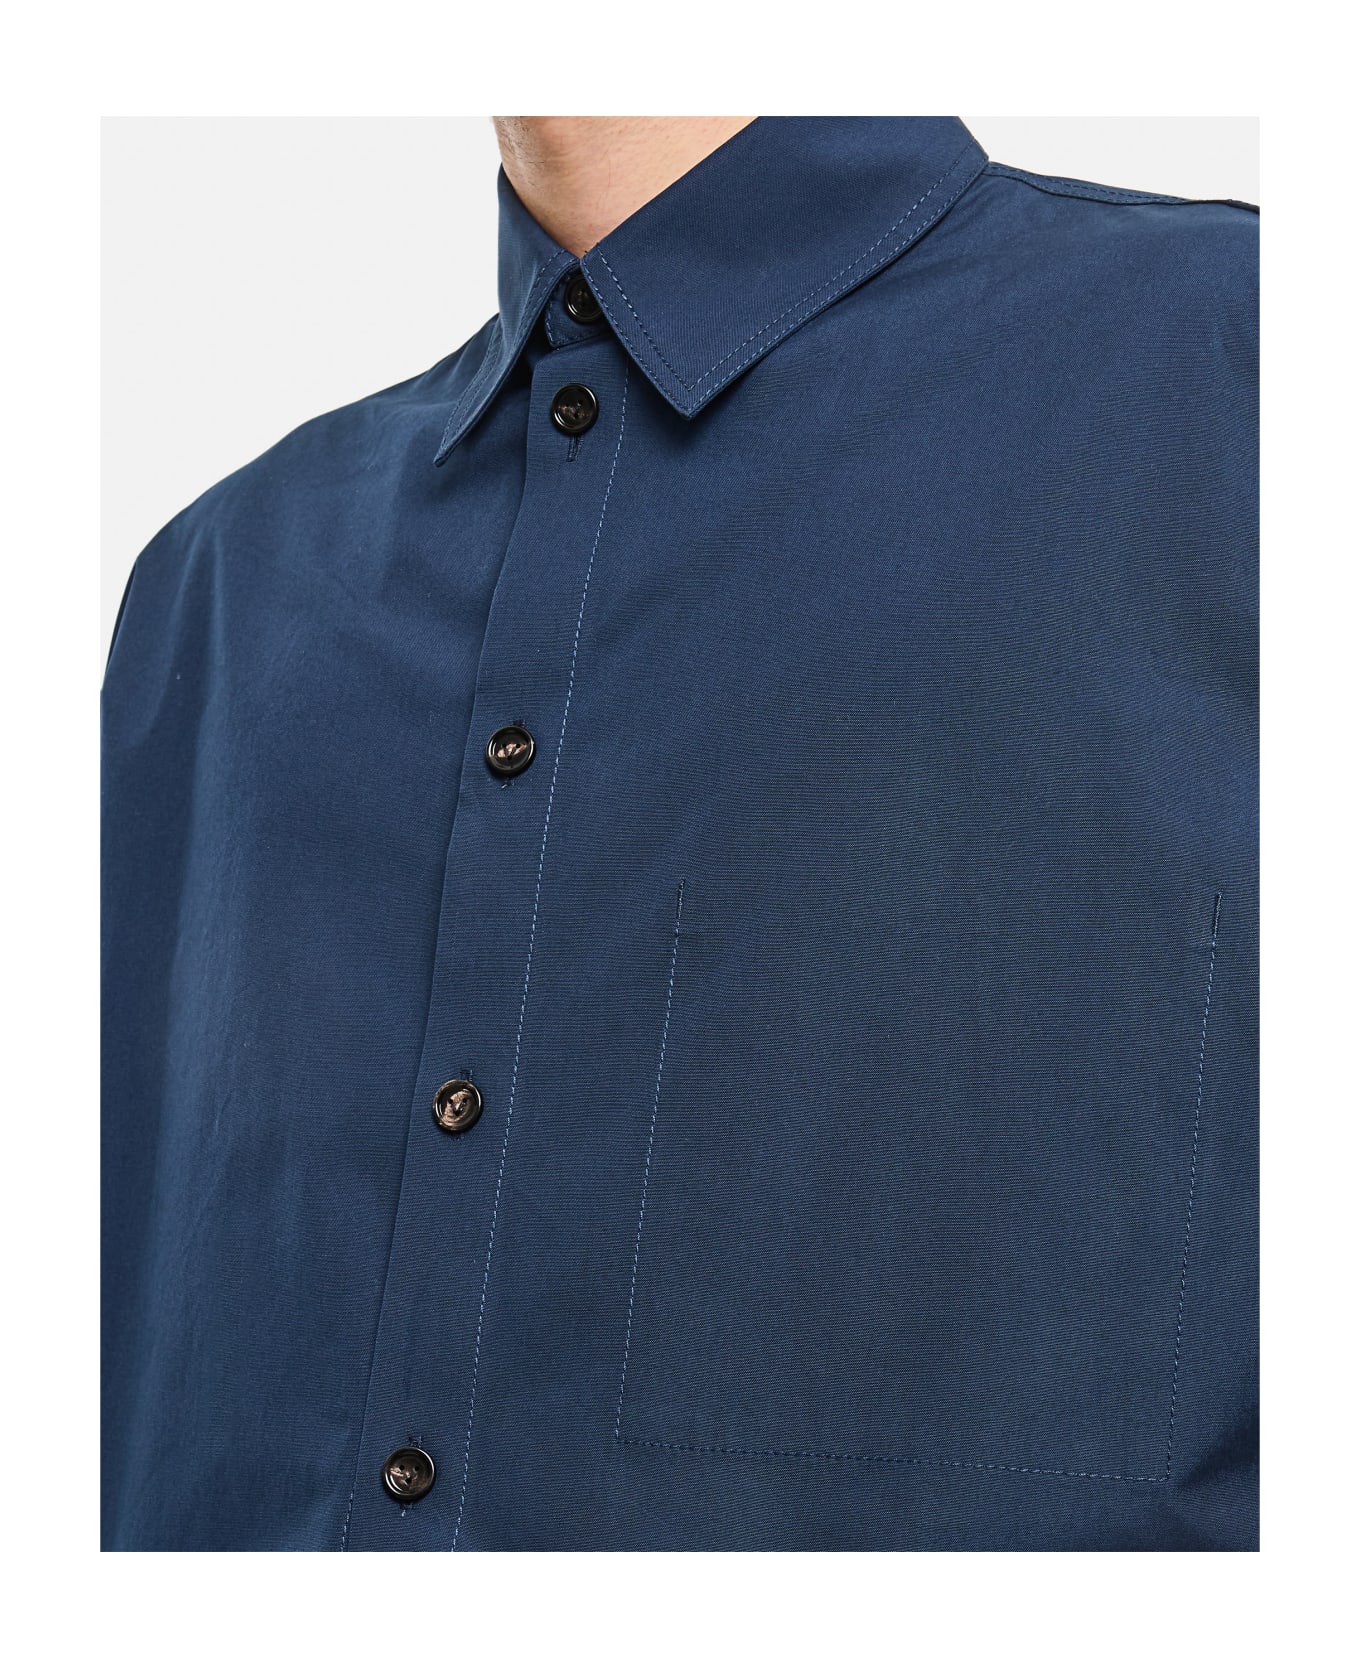 Bottega Veneta Cotton Shirt - Blue